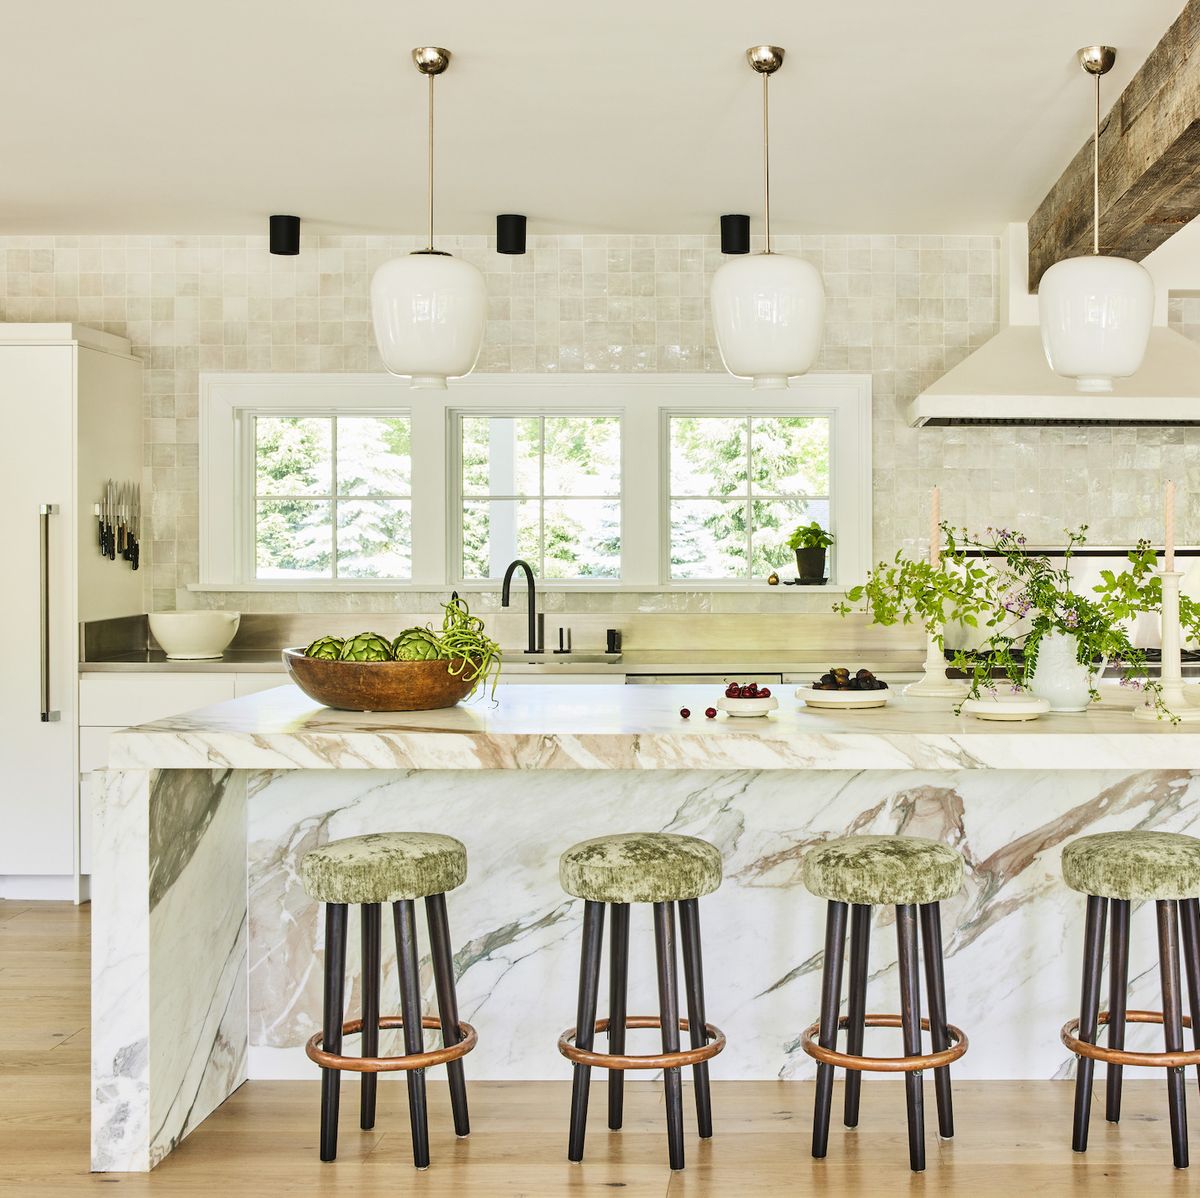 20 Kitchen Design Ideas   Remodeling Ideas for Interior Design